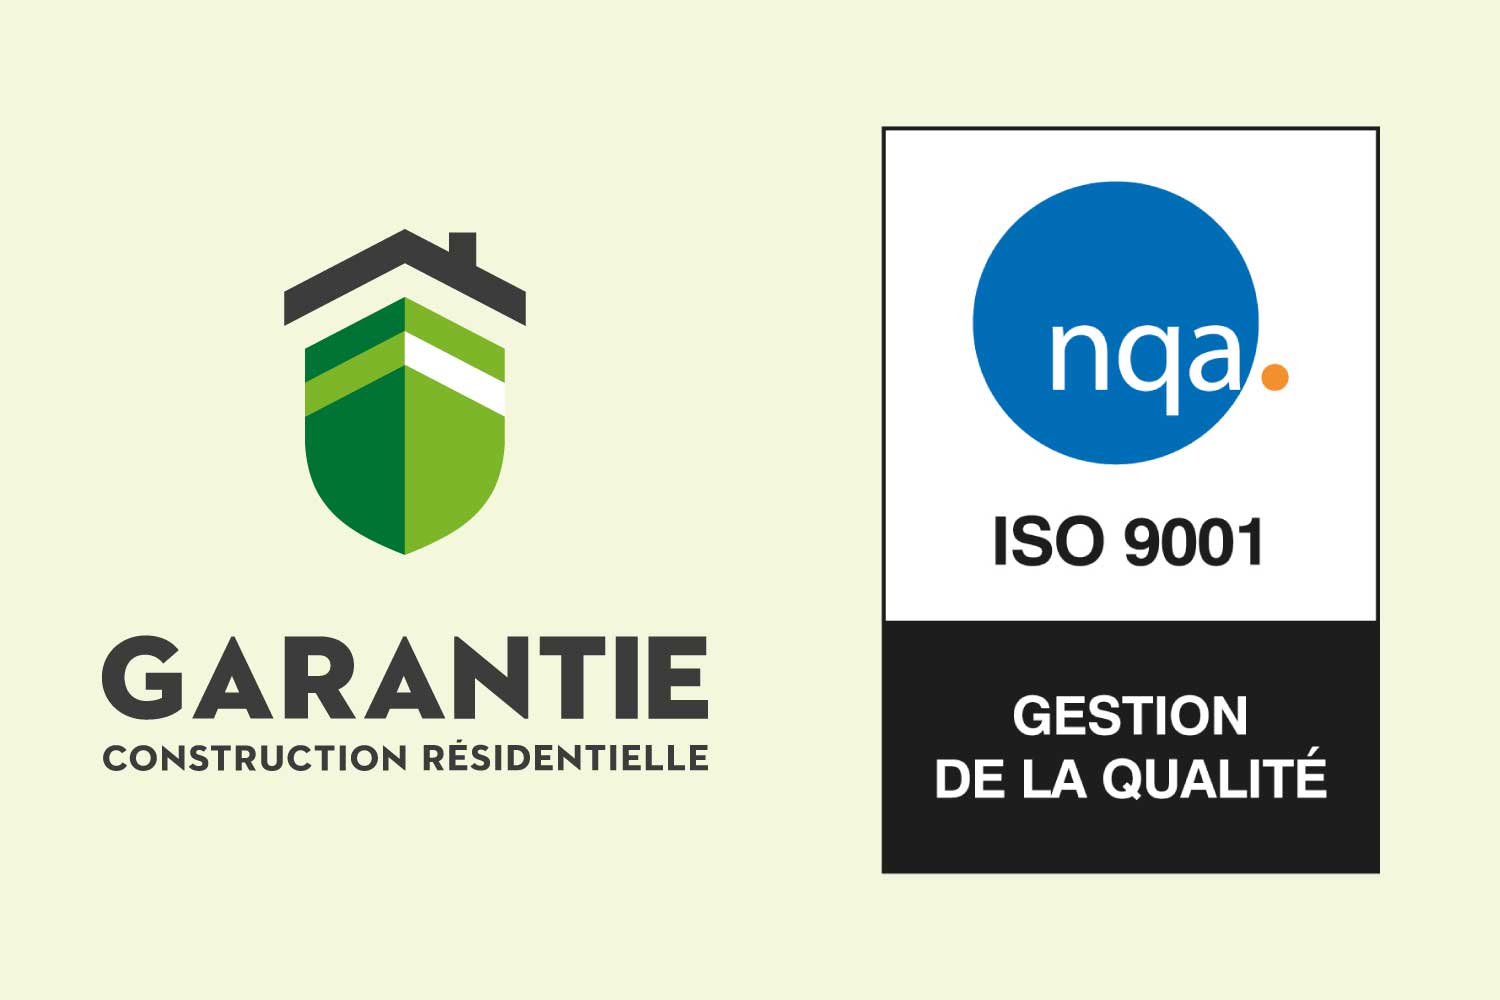 Garantie de construction résidentielle (GCR) obtient la certification ISO 9001:2015